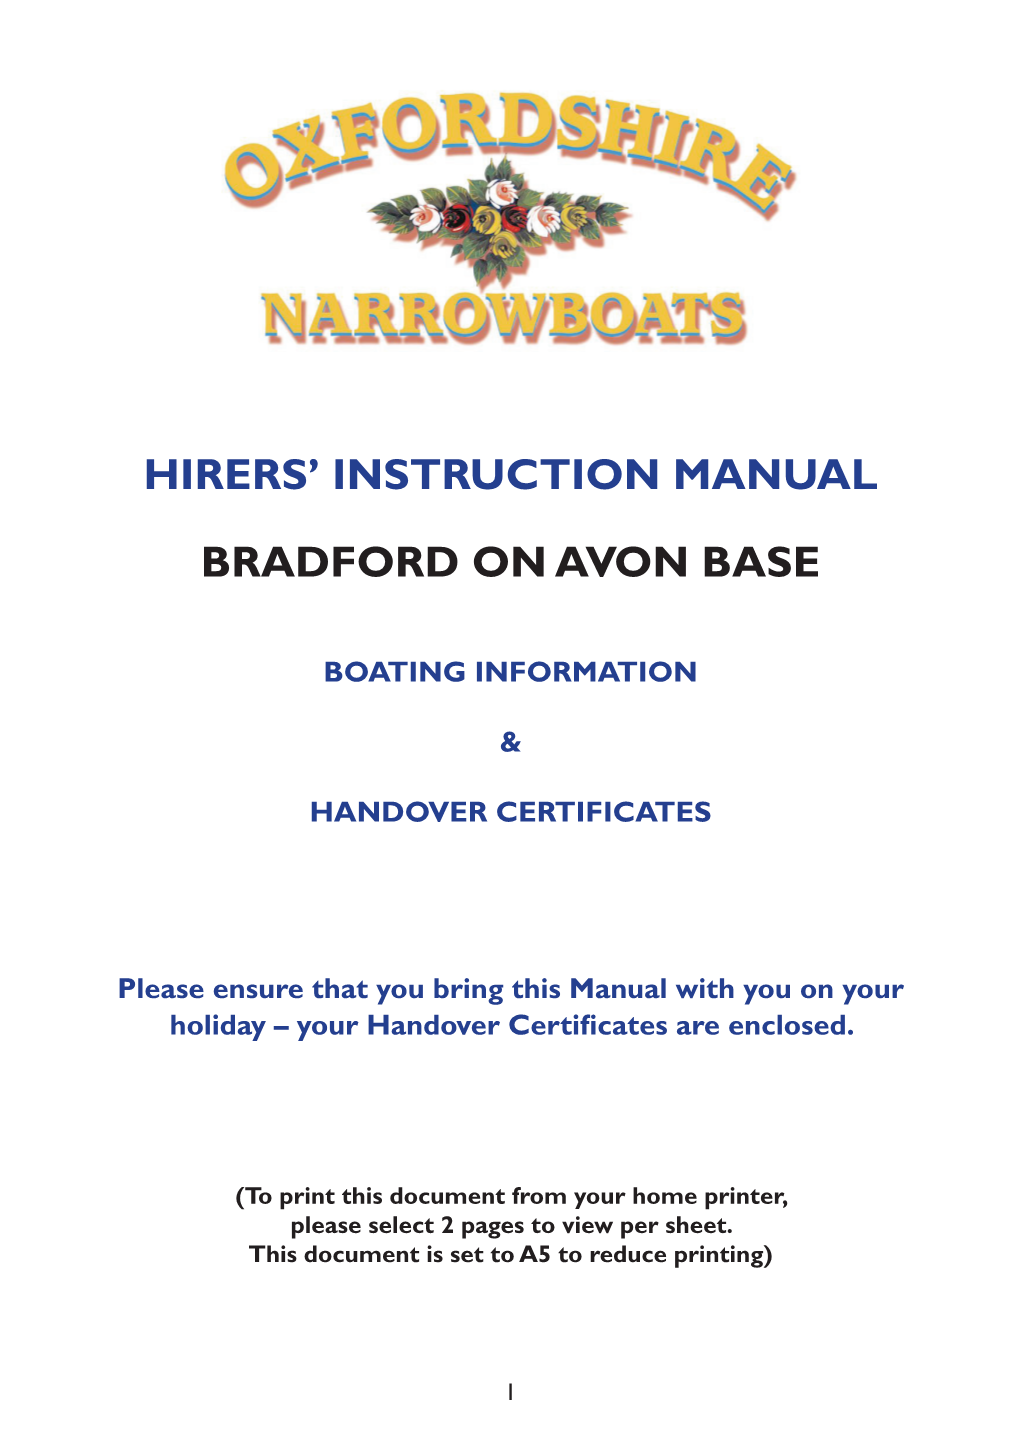 Hirers' Instruction Manual Bradford on Avon Base